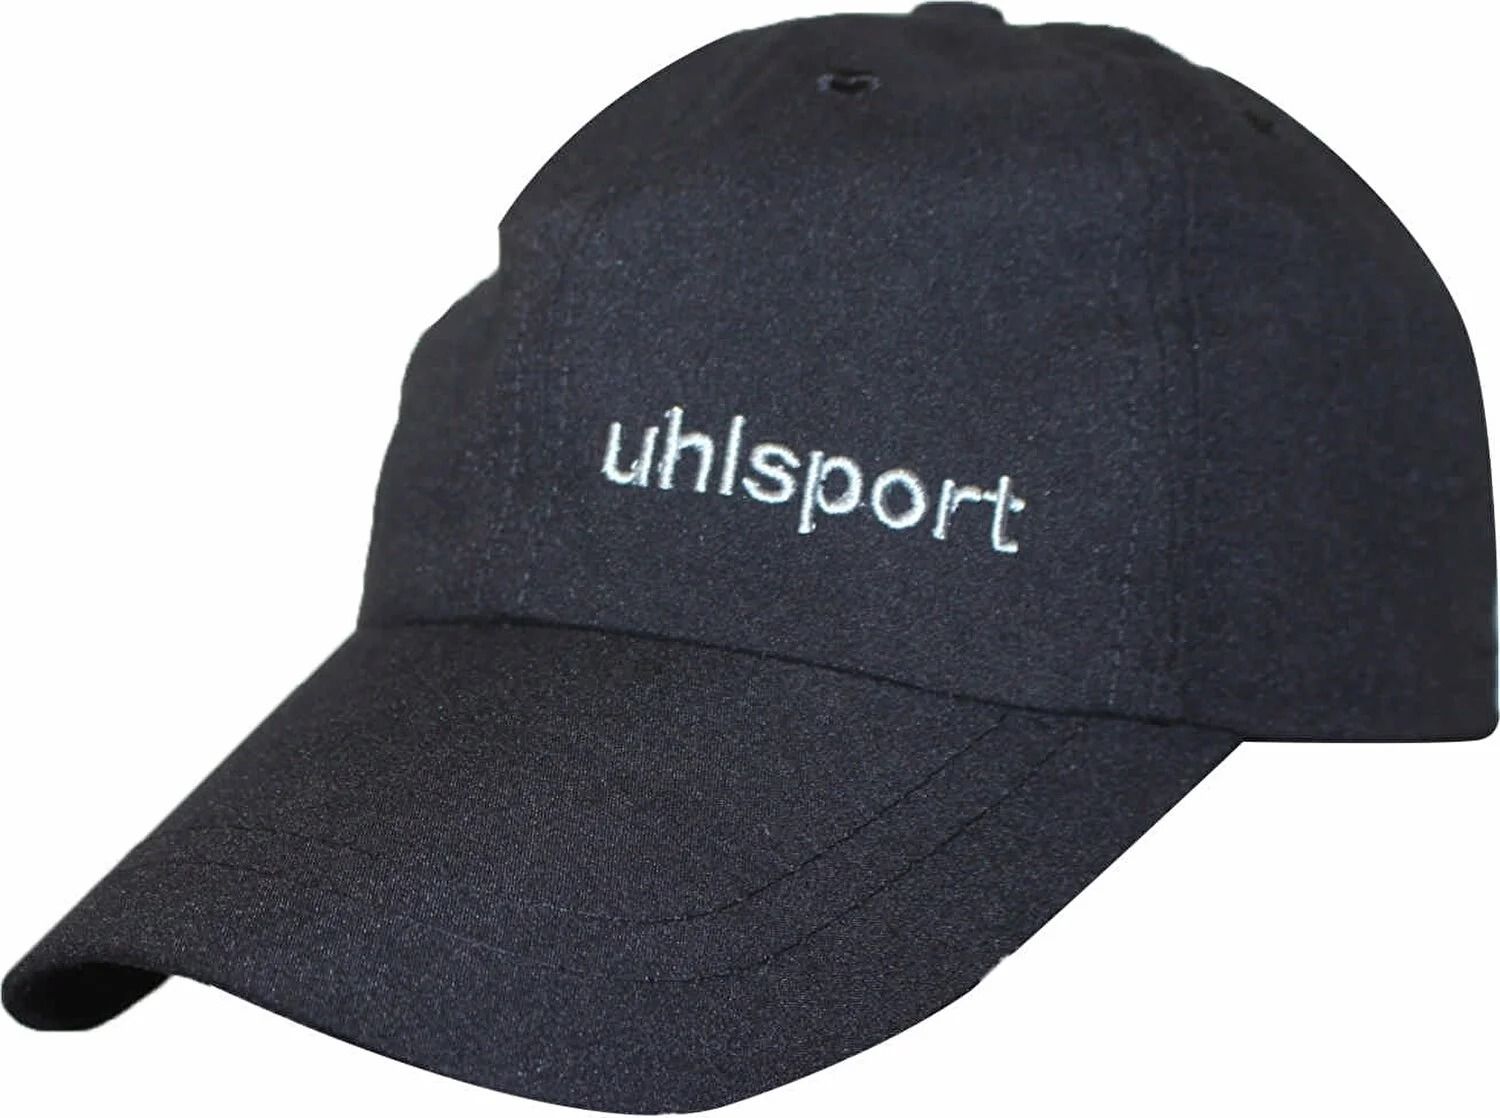 Uhlsport 8201010 20.008 Mıcro Leo Unisex Şapka Siyah